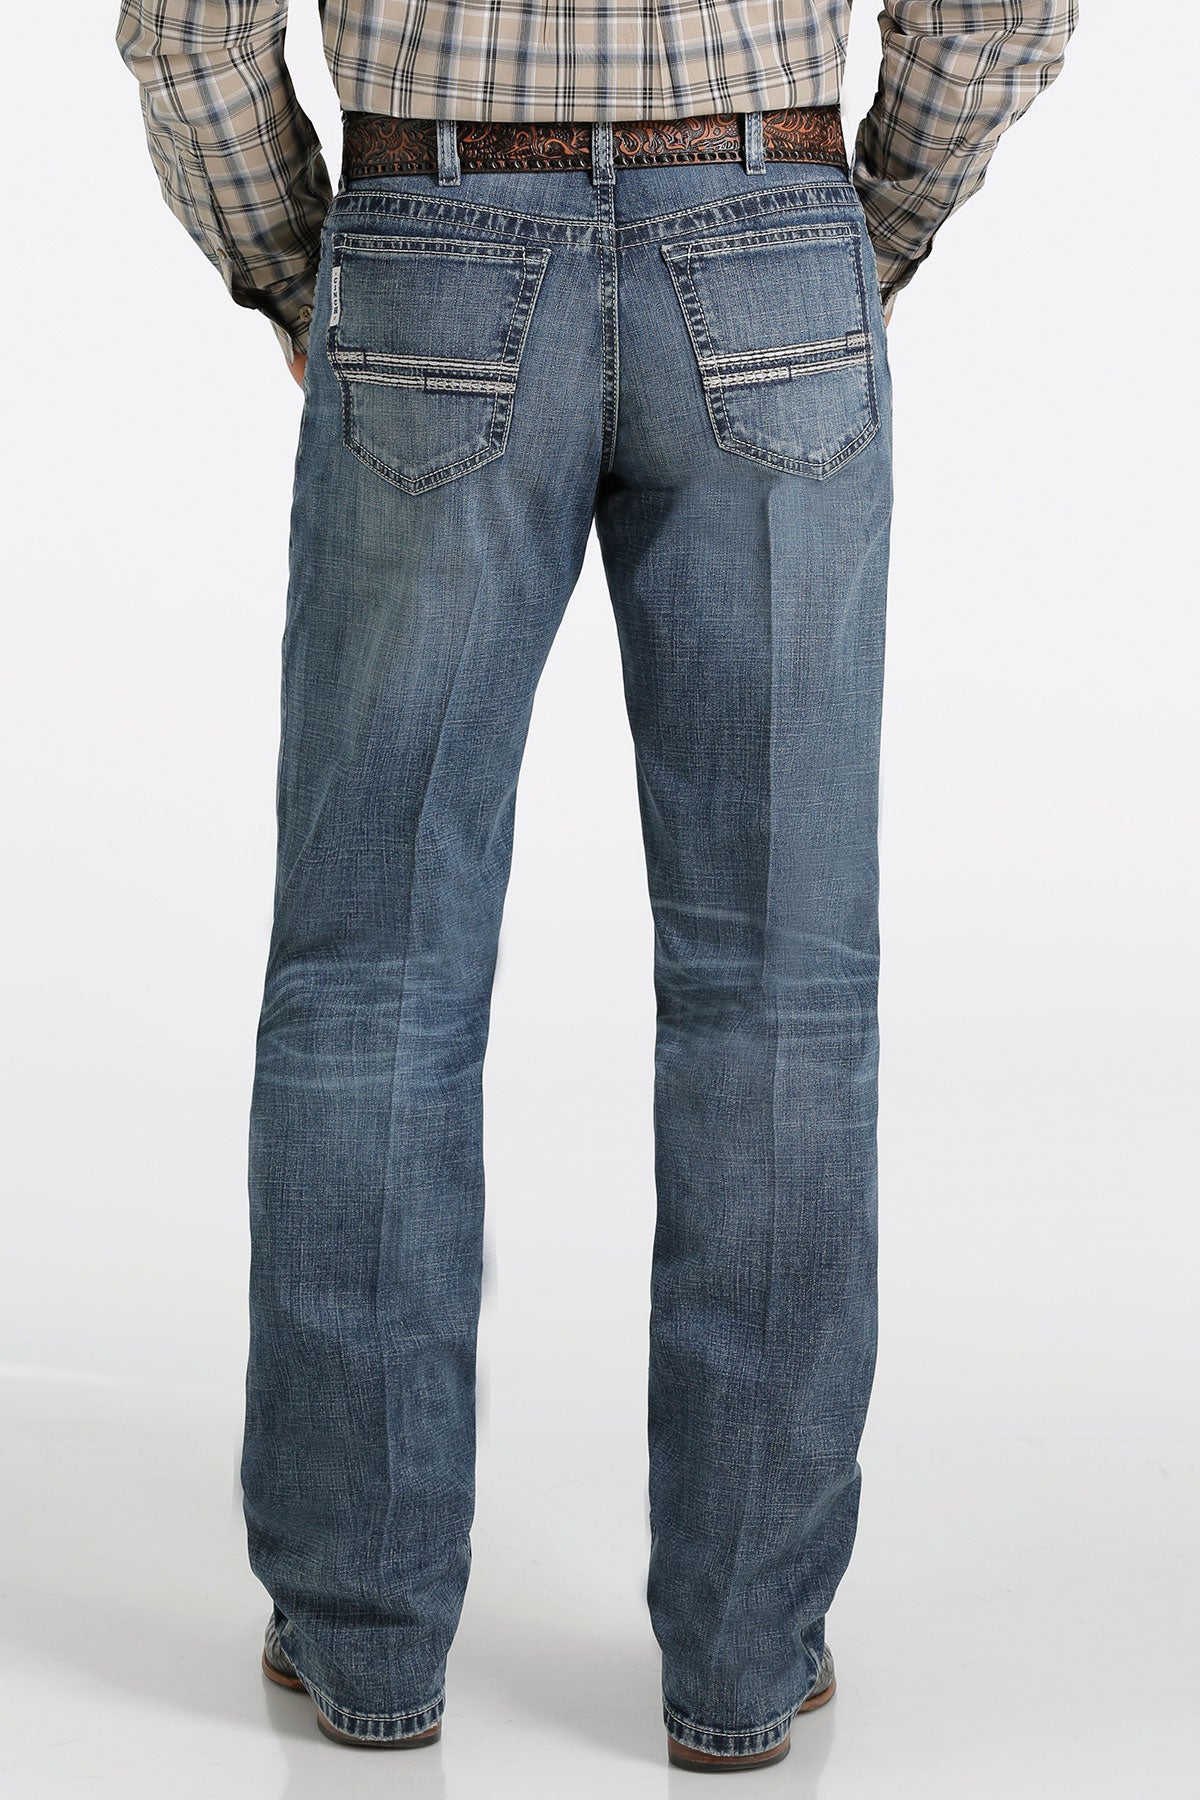 Men's White Label Jeans-4045